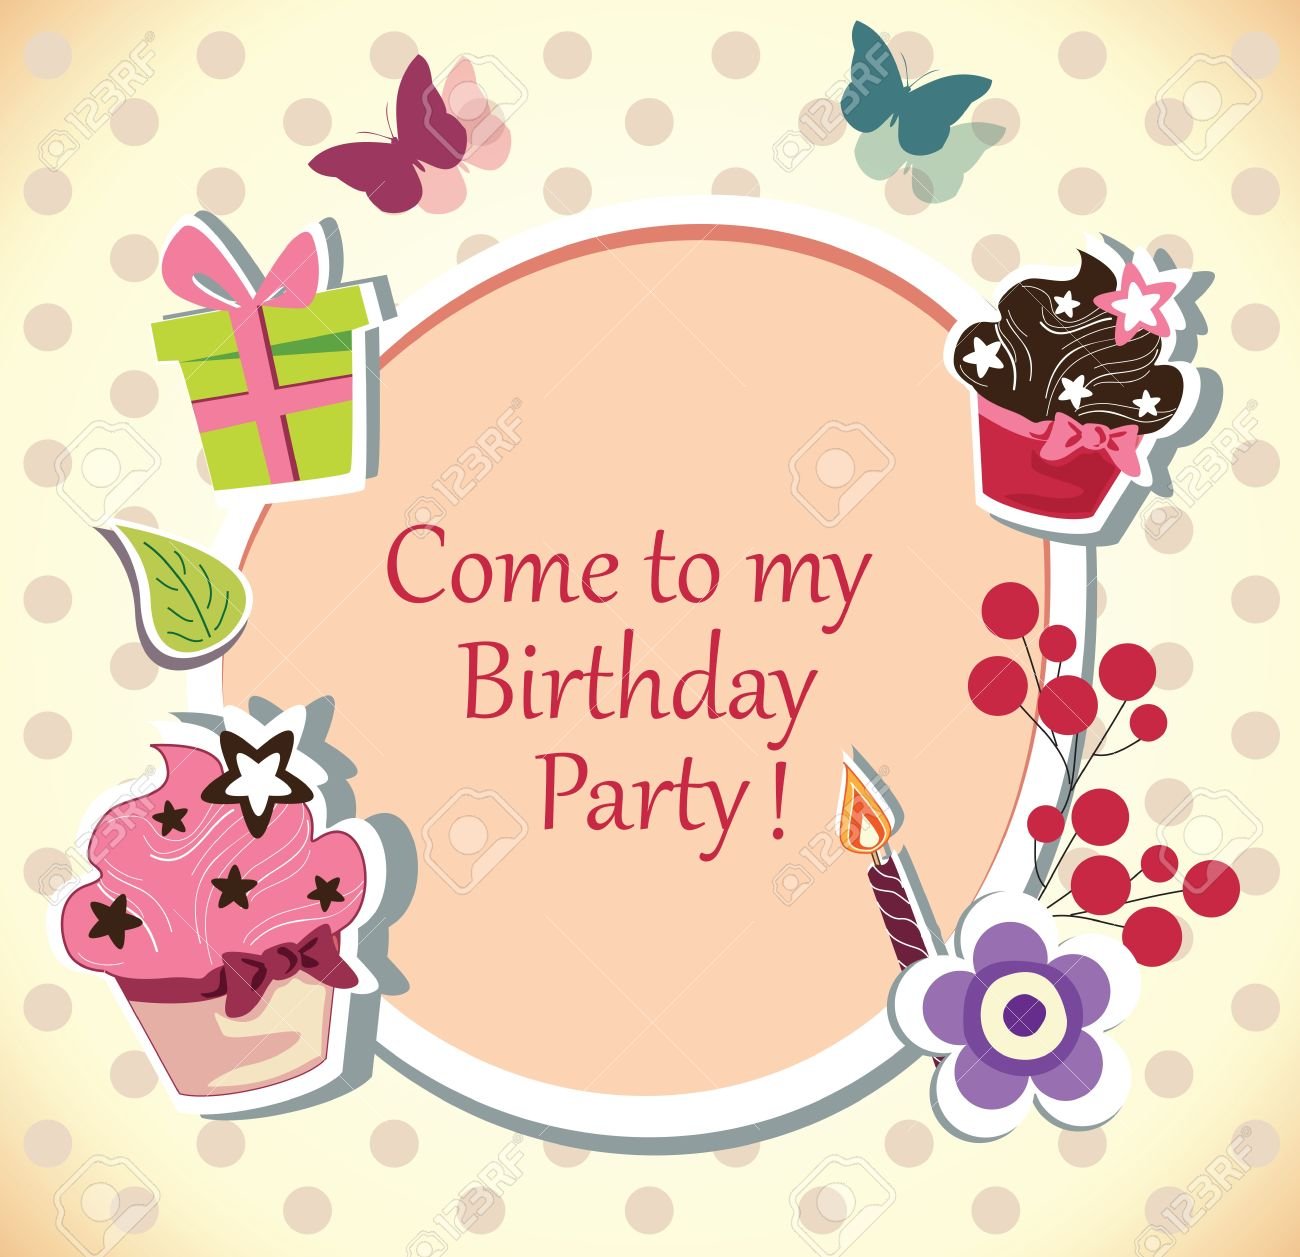 Birthday Party Invitation Card Royalty Free Cliparts, Vectors, And